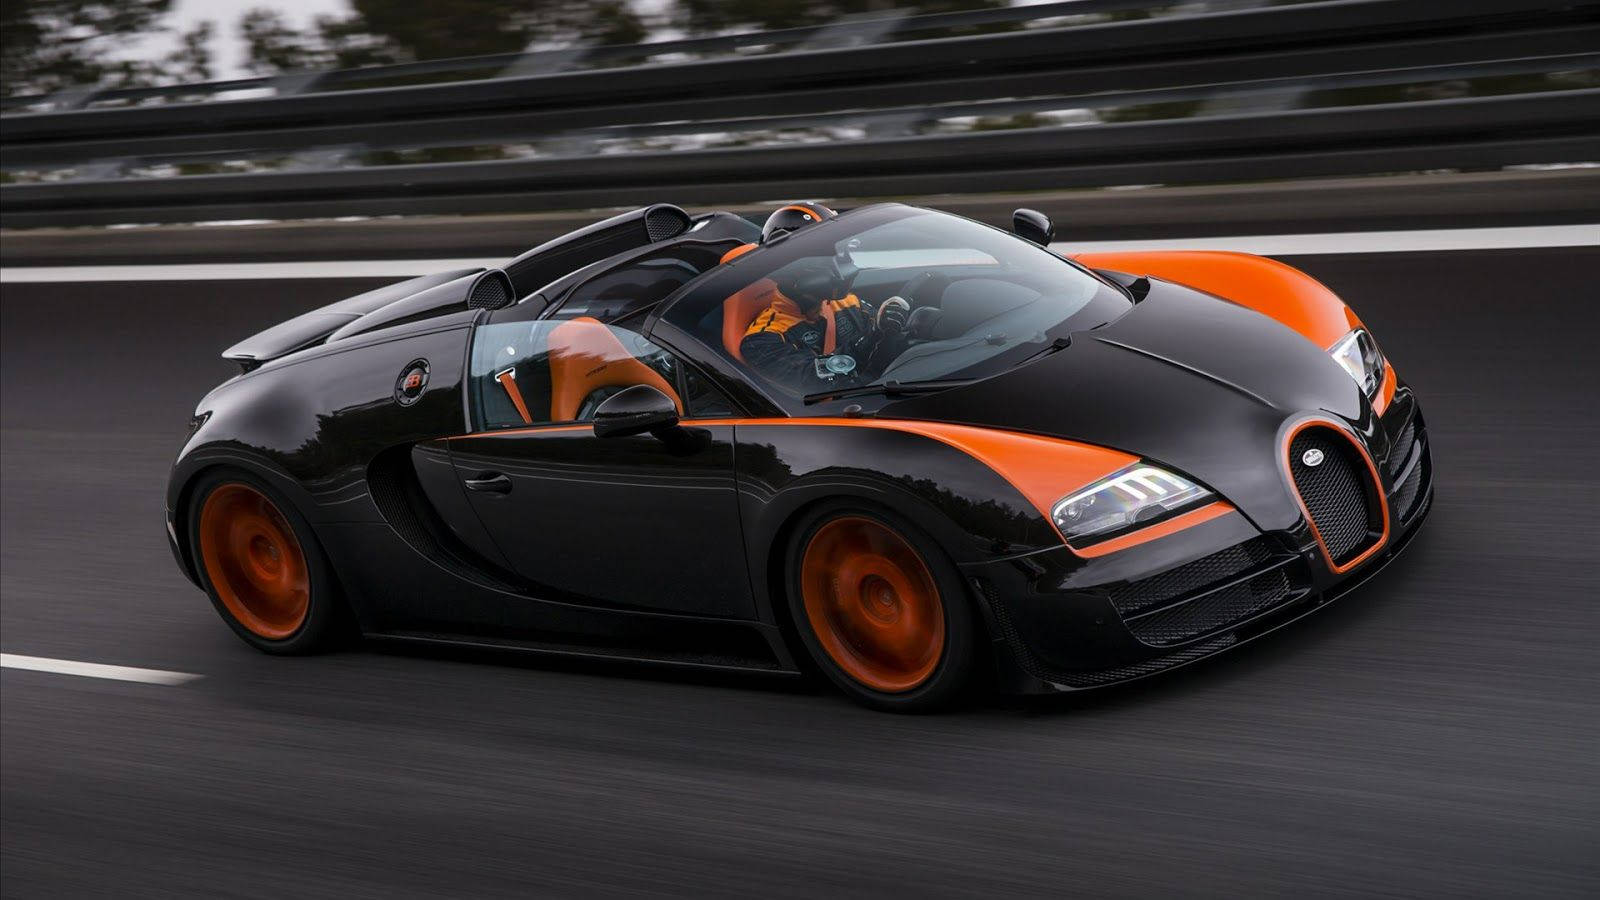 Fast-moving Bugatti Veyron Supercar Wallpaper